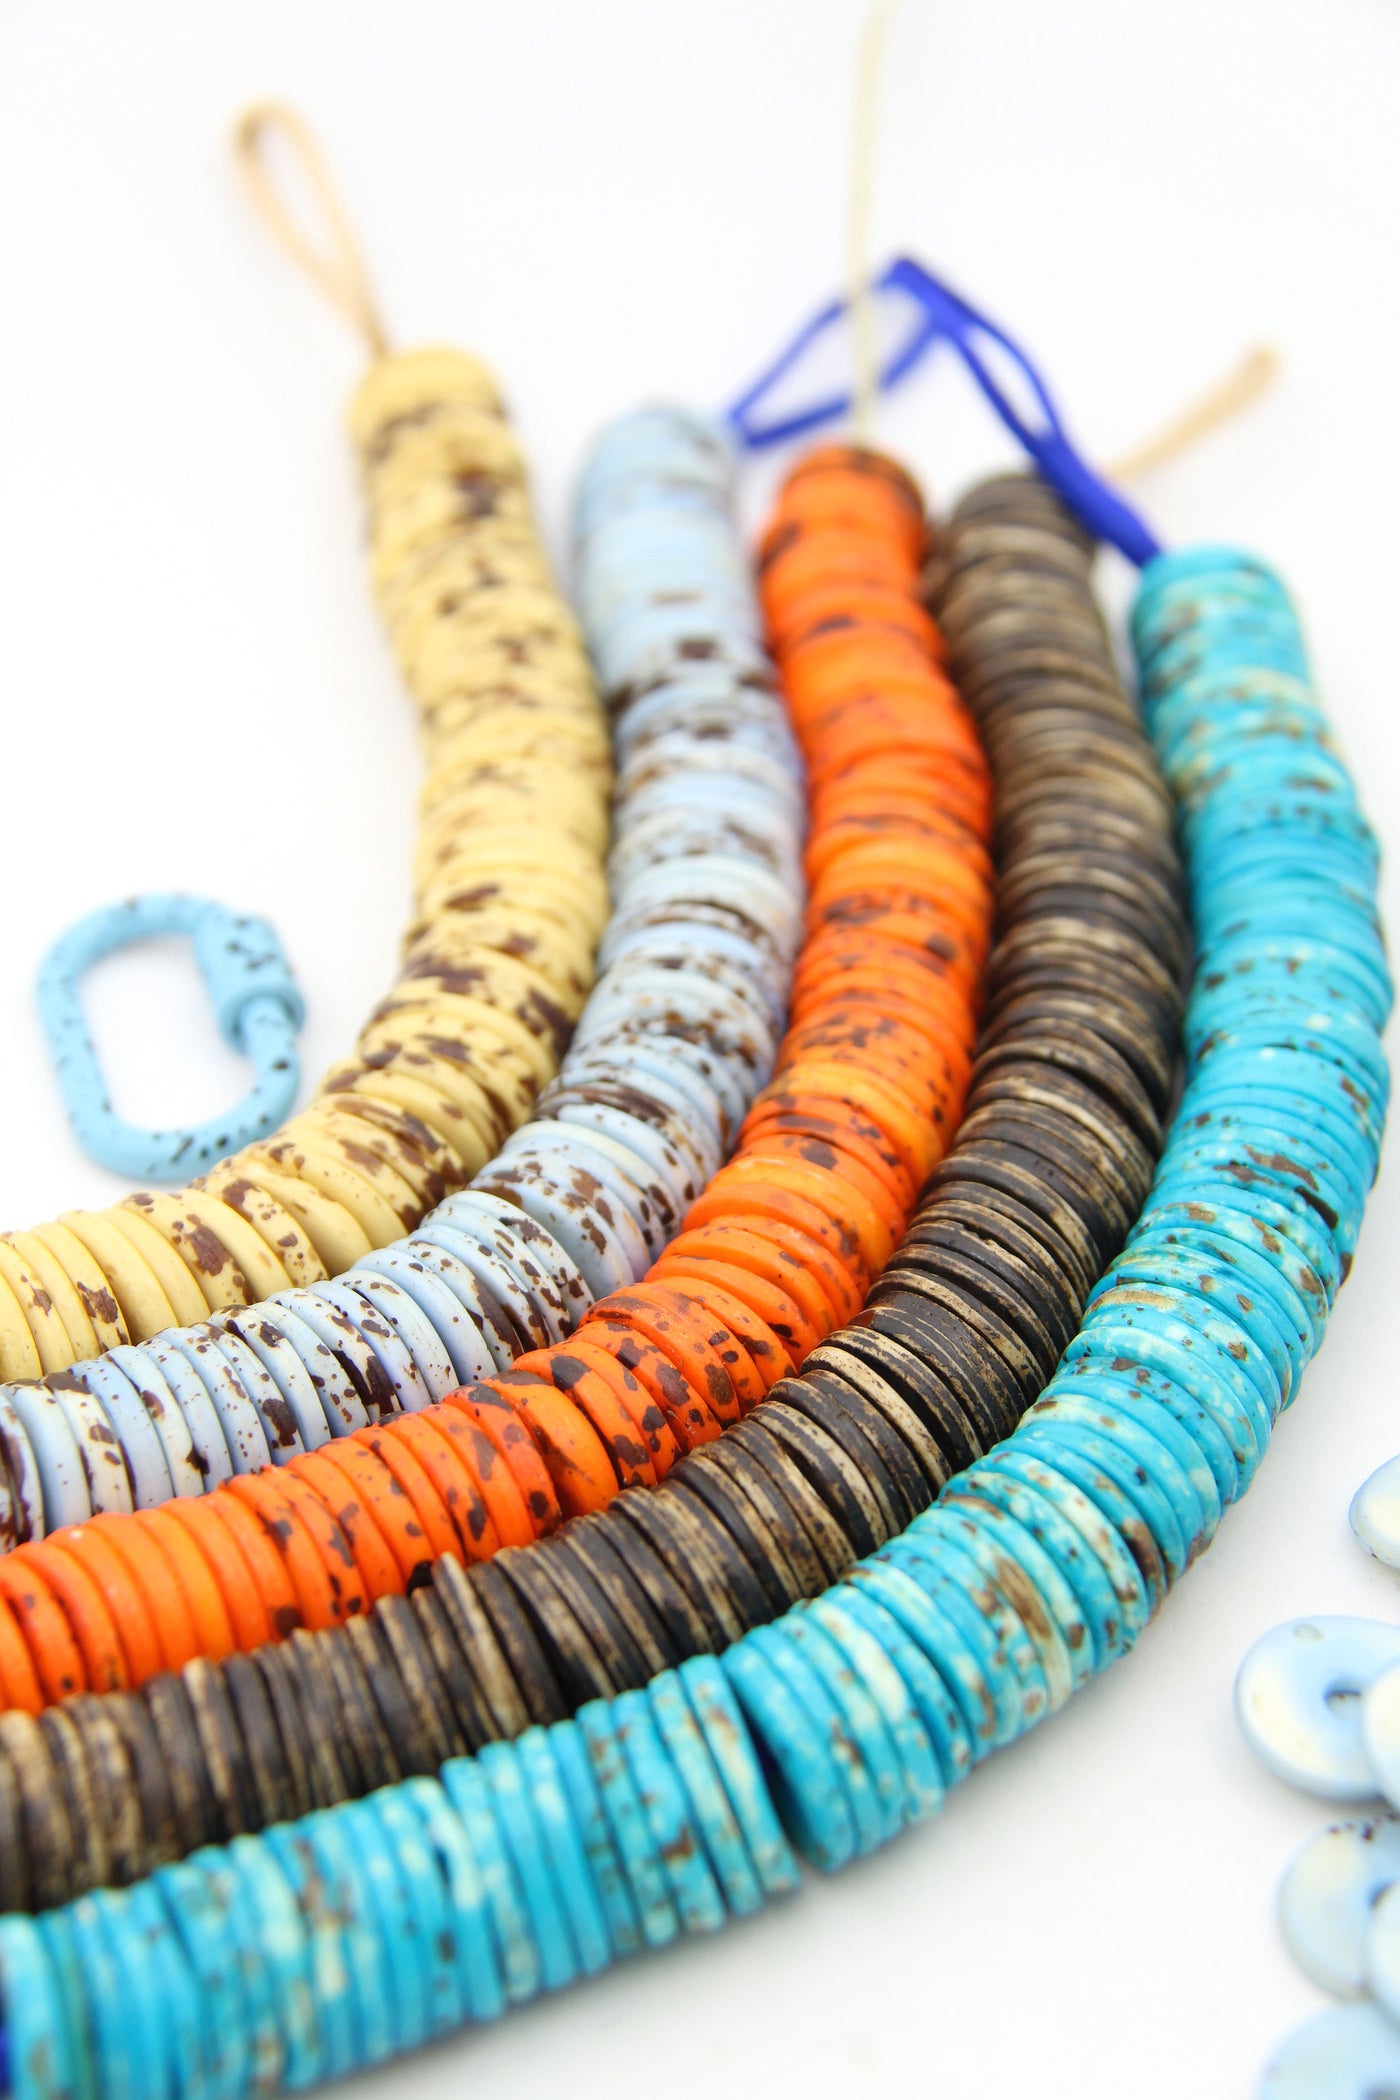 Bold Mottled Bone Beads, Heishi Spacer Beads, 16x2mm, 80 beads